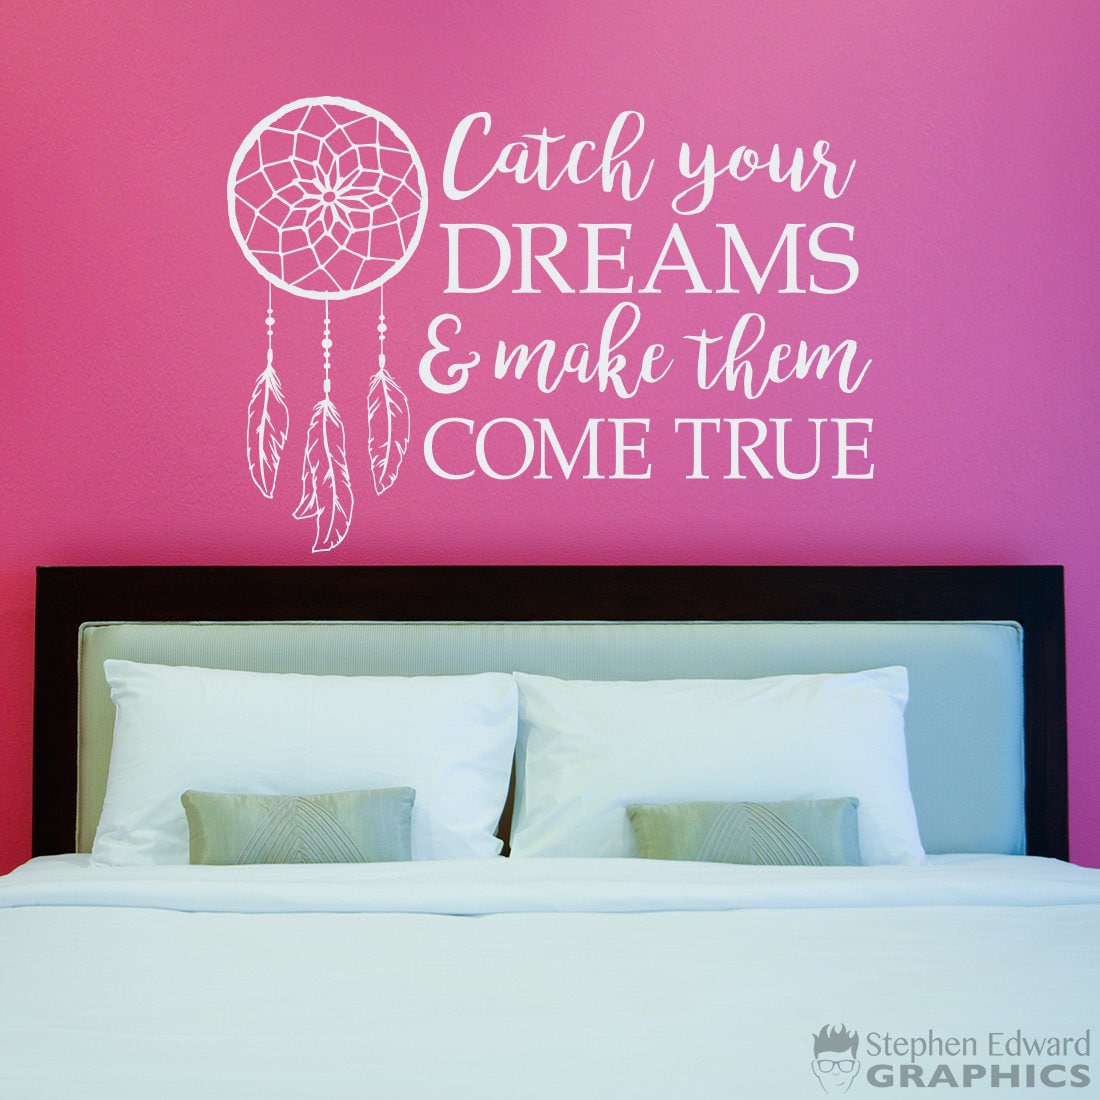 Dreamcatcher Decal | Catch your Dreams & make them come true Quote | Dream Catcher Bedroom Wall Vinyl